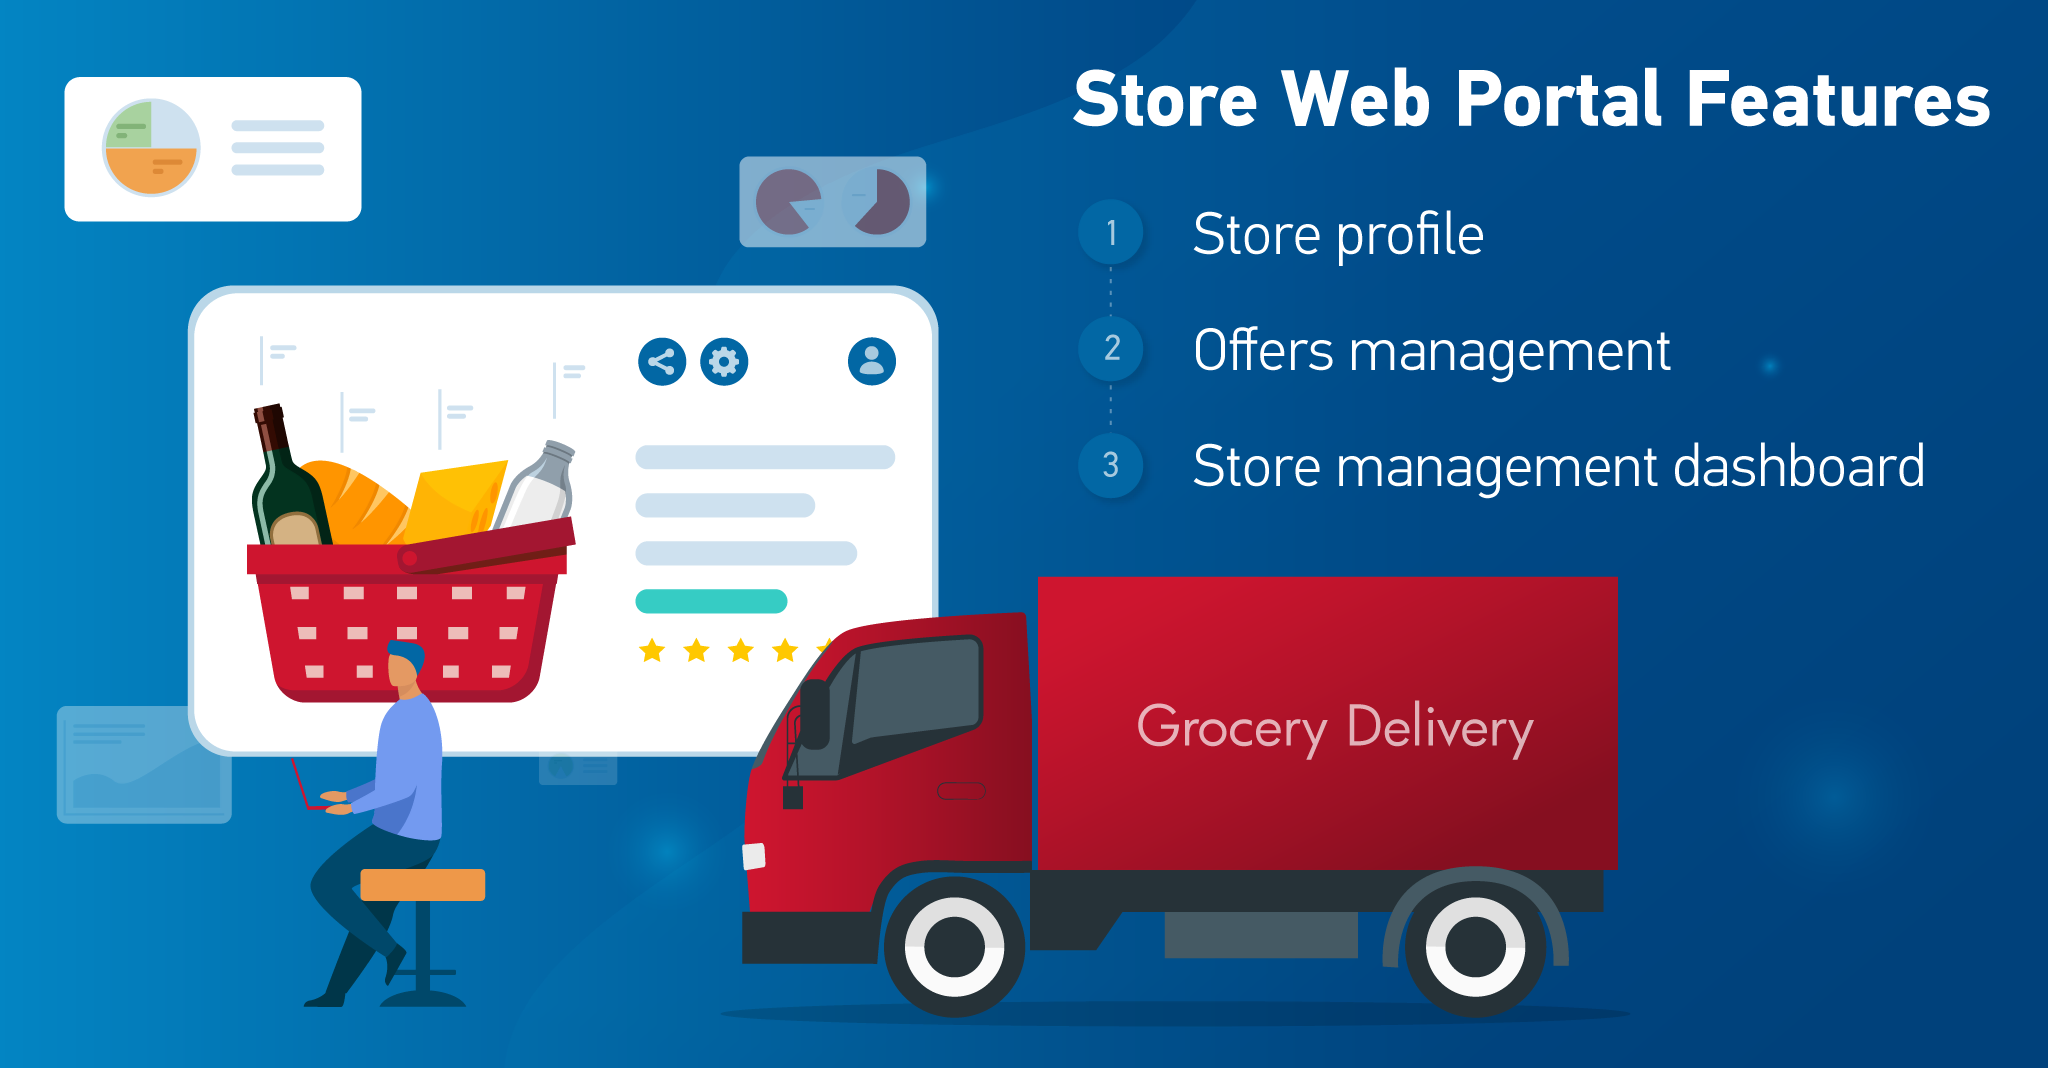 Store web portal features